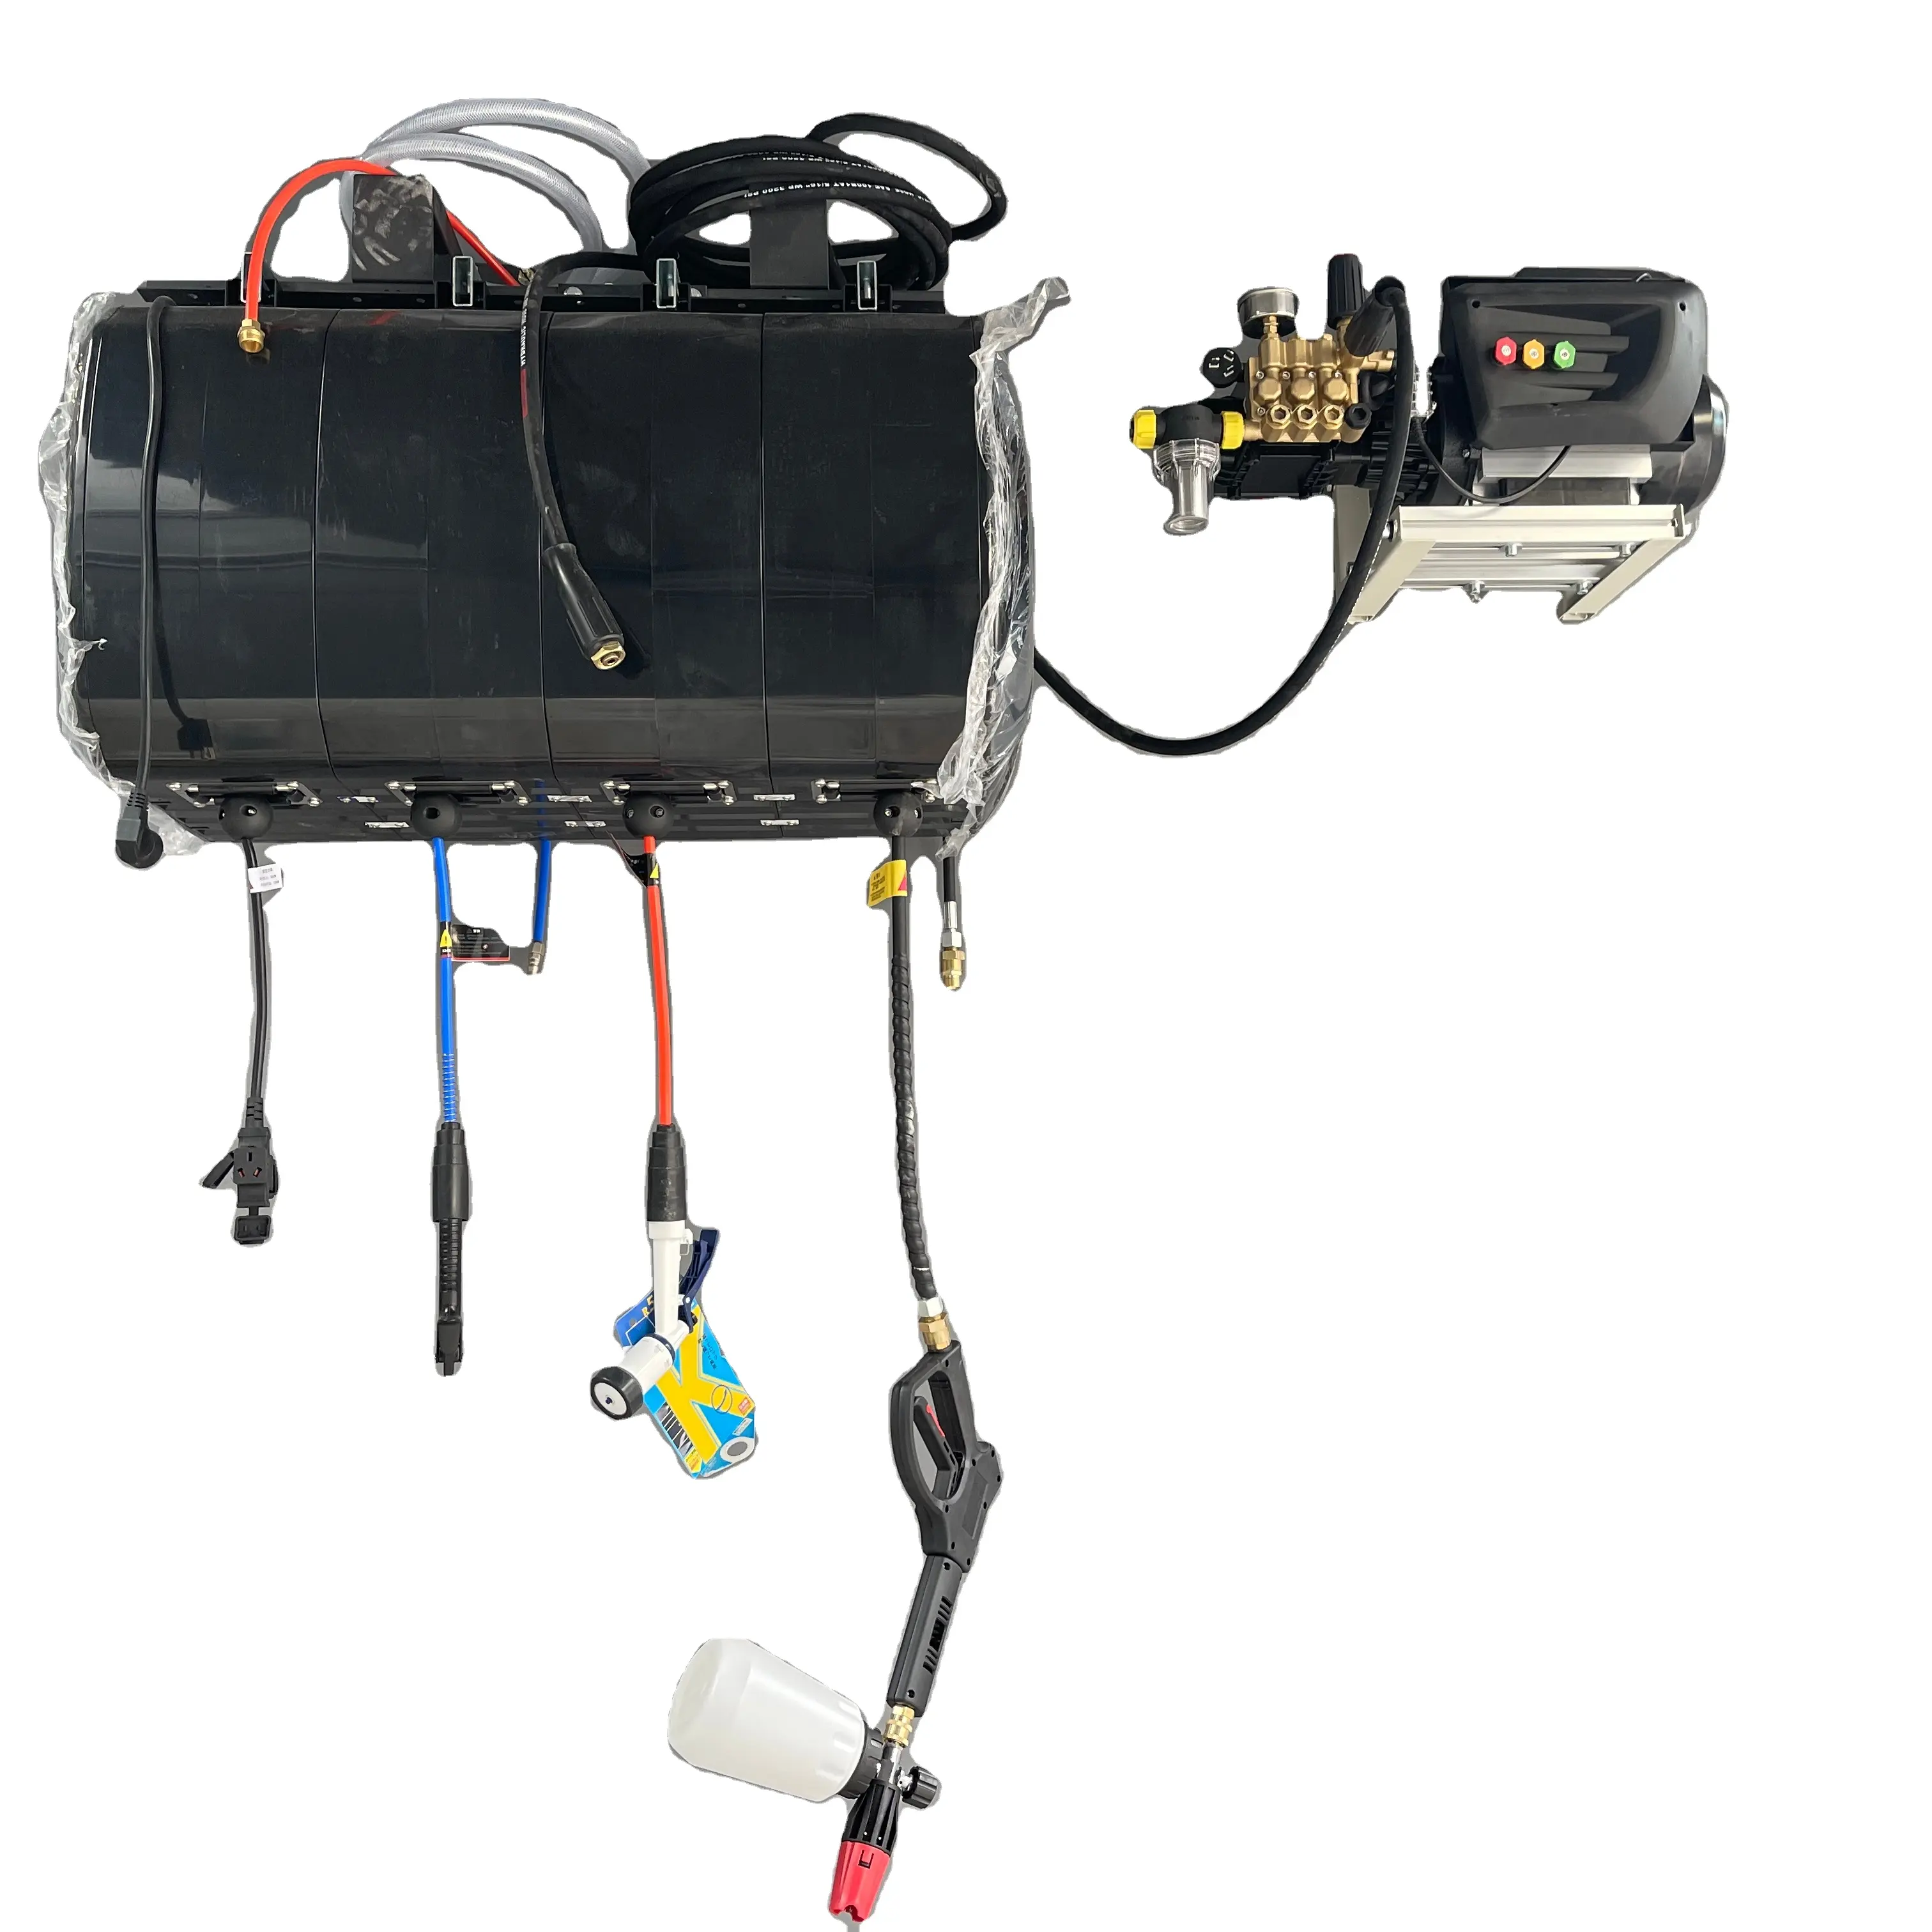 KLCB selang tunggal peralatan Detailing, alat cuci mobil, perbaikan bengkel, tekanan tinggi/Air/tekanan tinggi